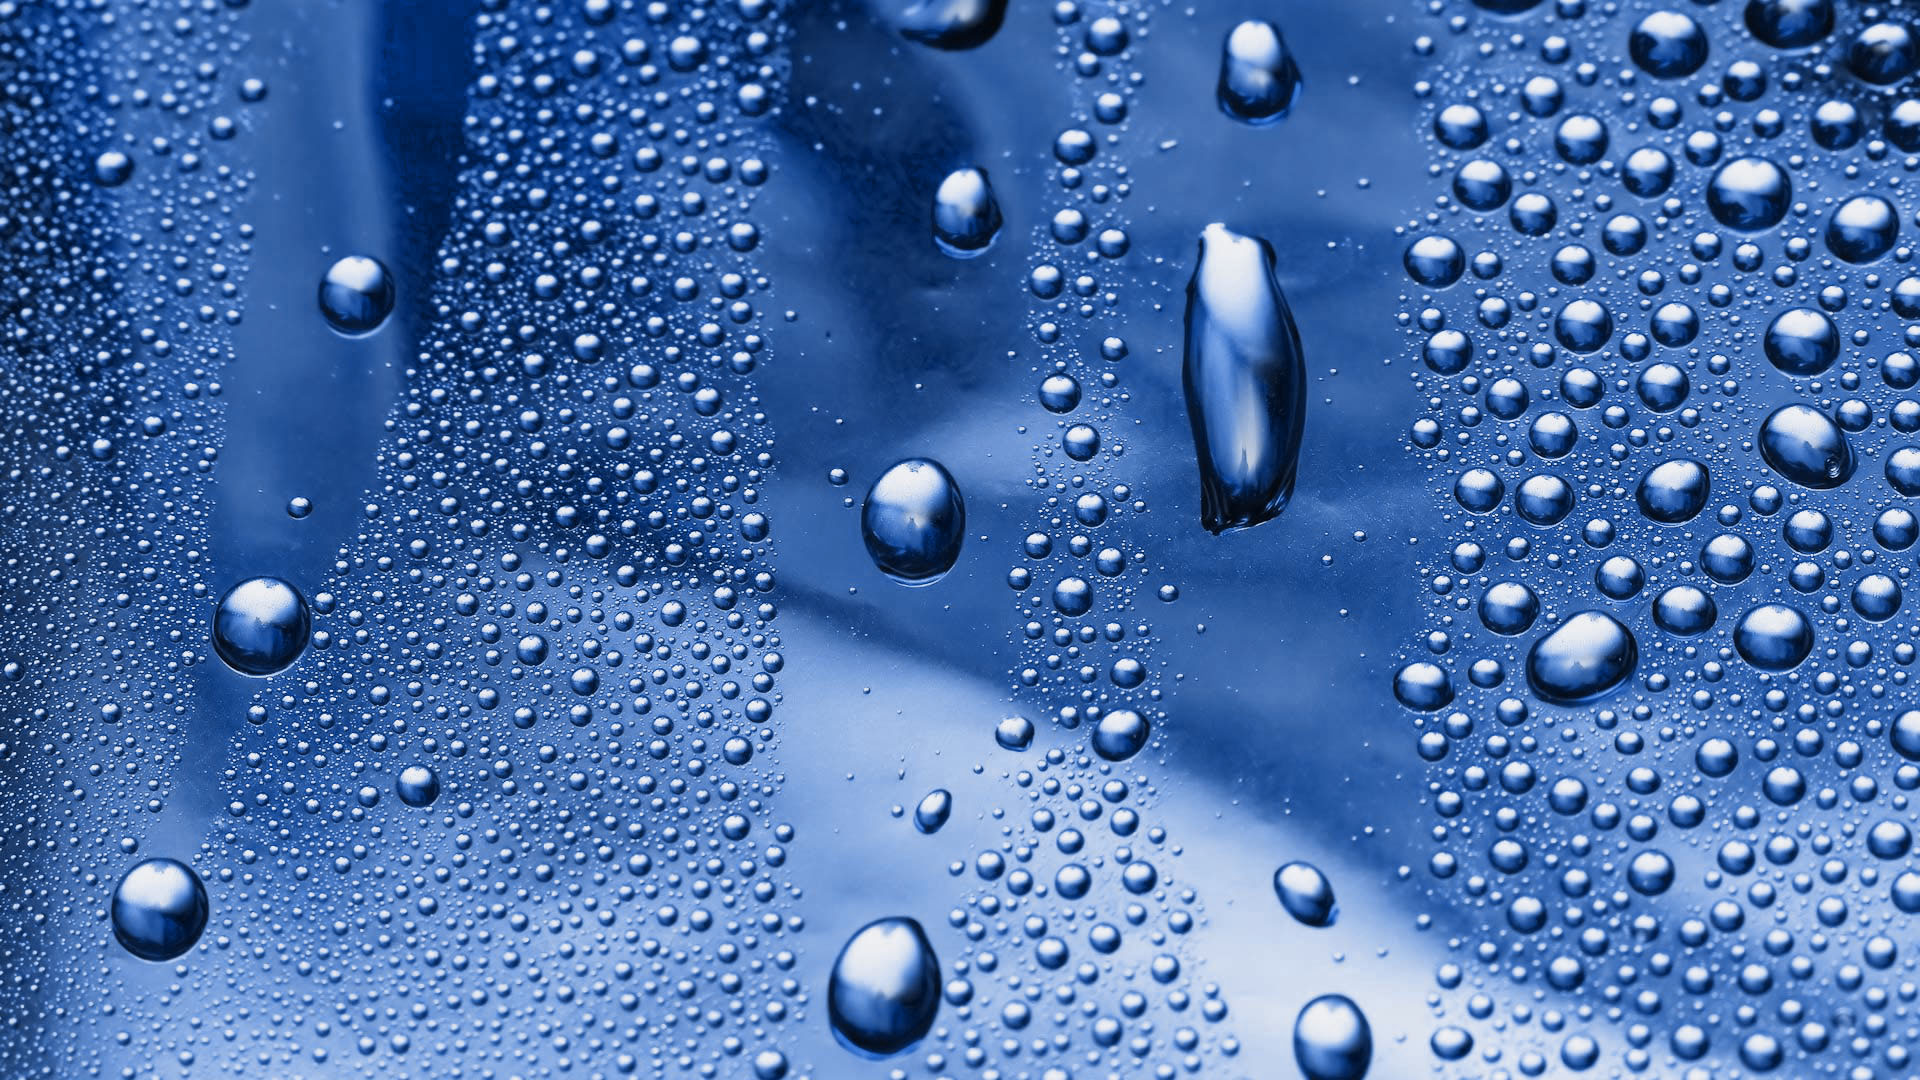 Blue Water Drops Closeup HD Image Photography